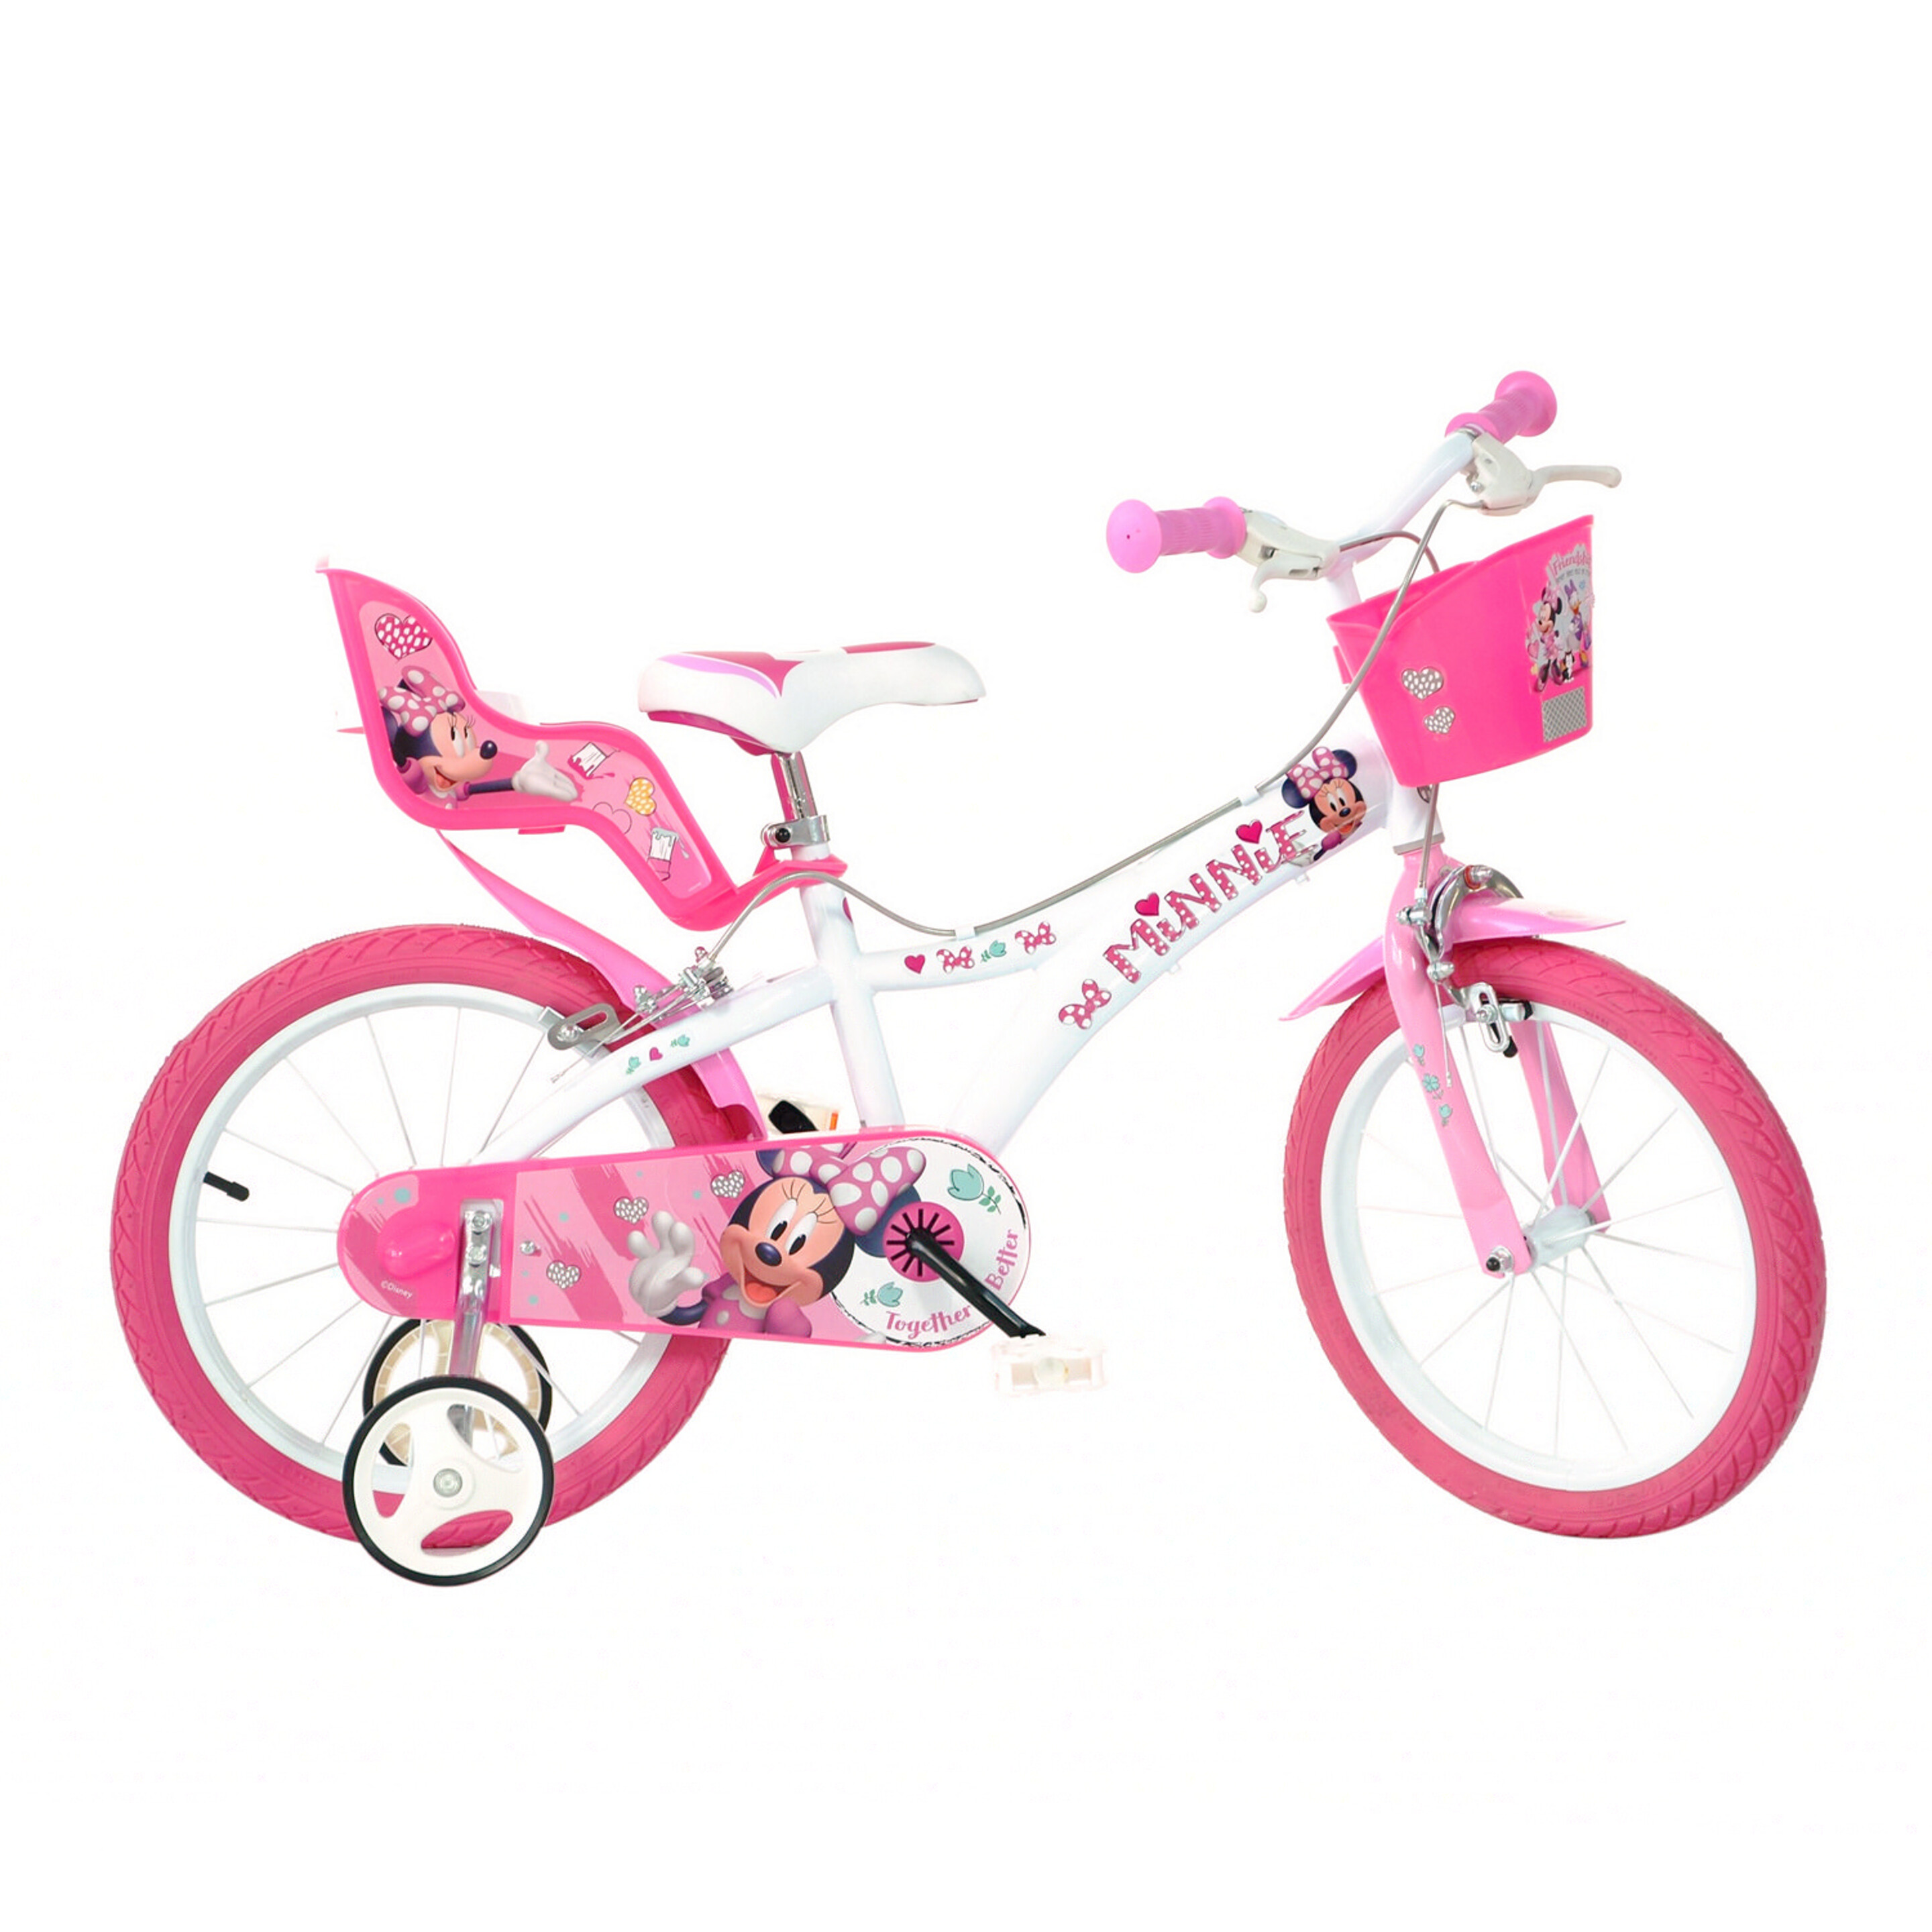 Bicicleta Infantil Minnie Mouse 16 Pulgadas 5-7 Años